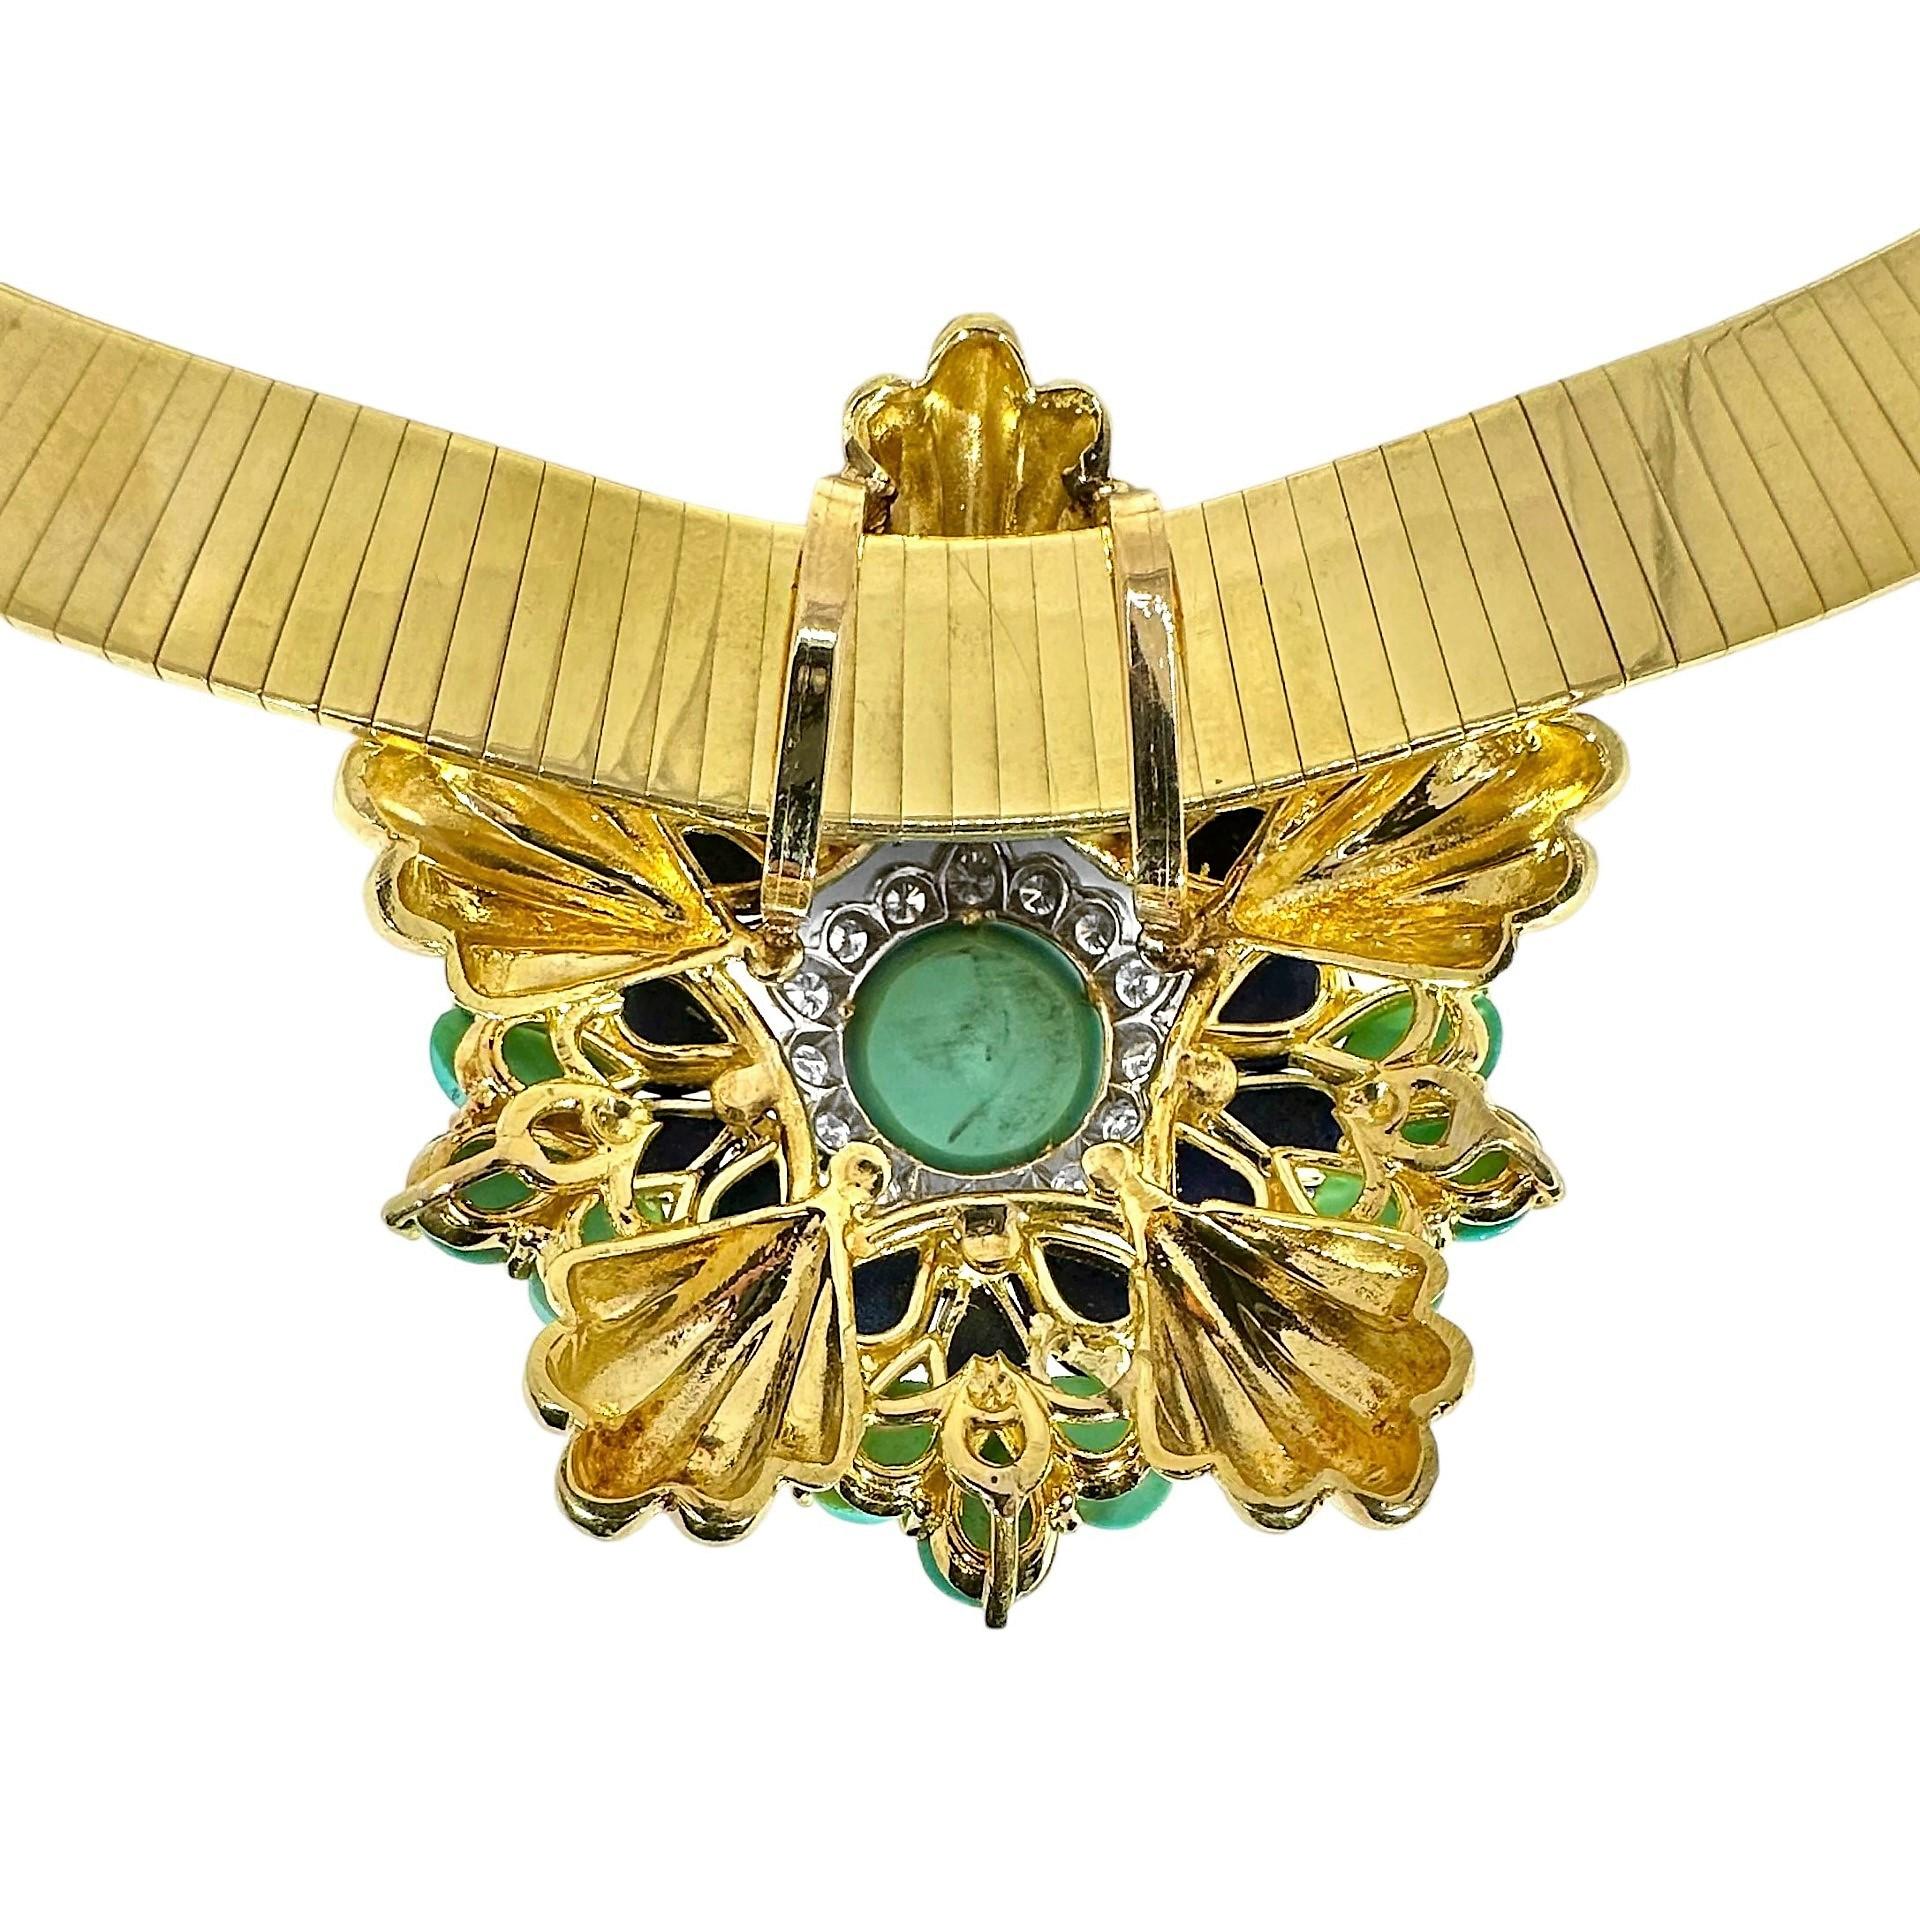 Brilliant Cut Elegant, Yellow Gold, Turquoise, Lapis, and Diamond Large Pendant by Montclair